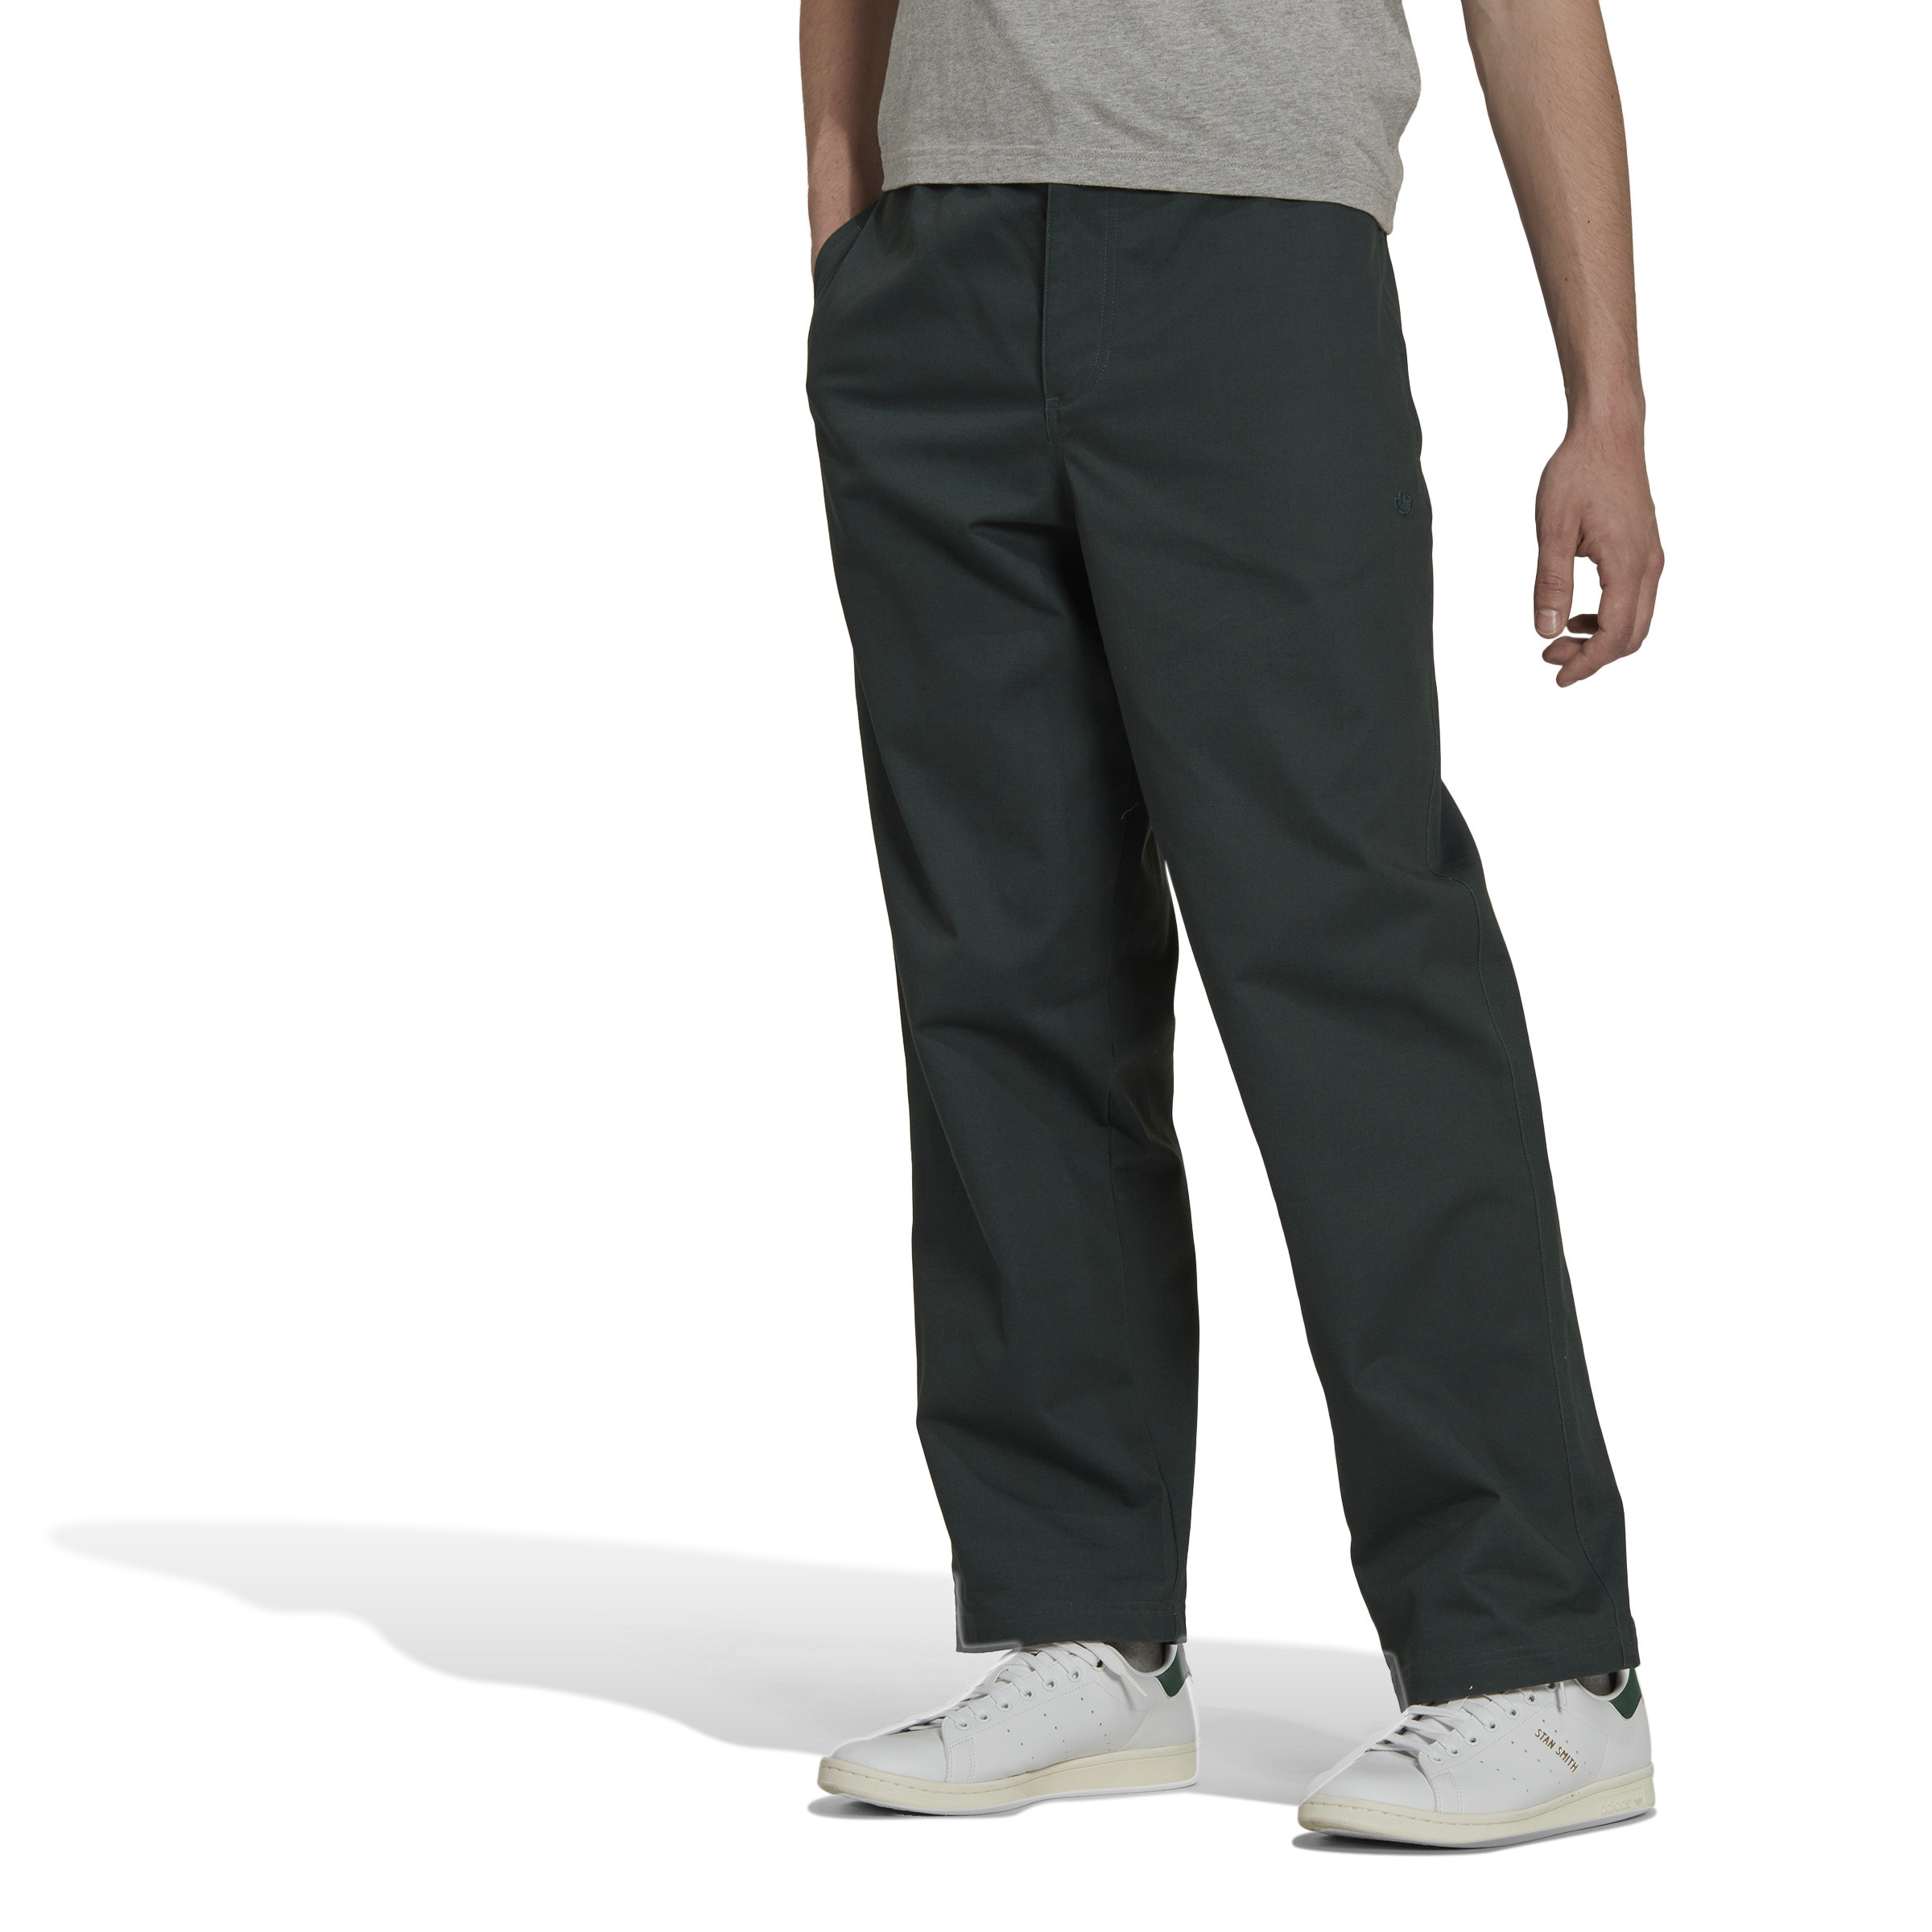 Adidas - Pantaloni adicolor chino, Verde scuro, large image number 1